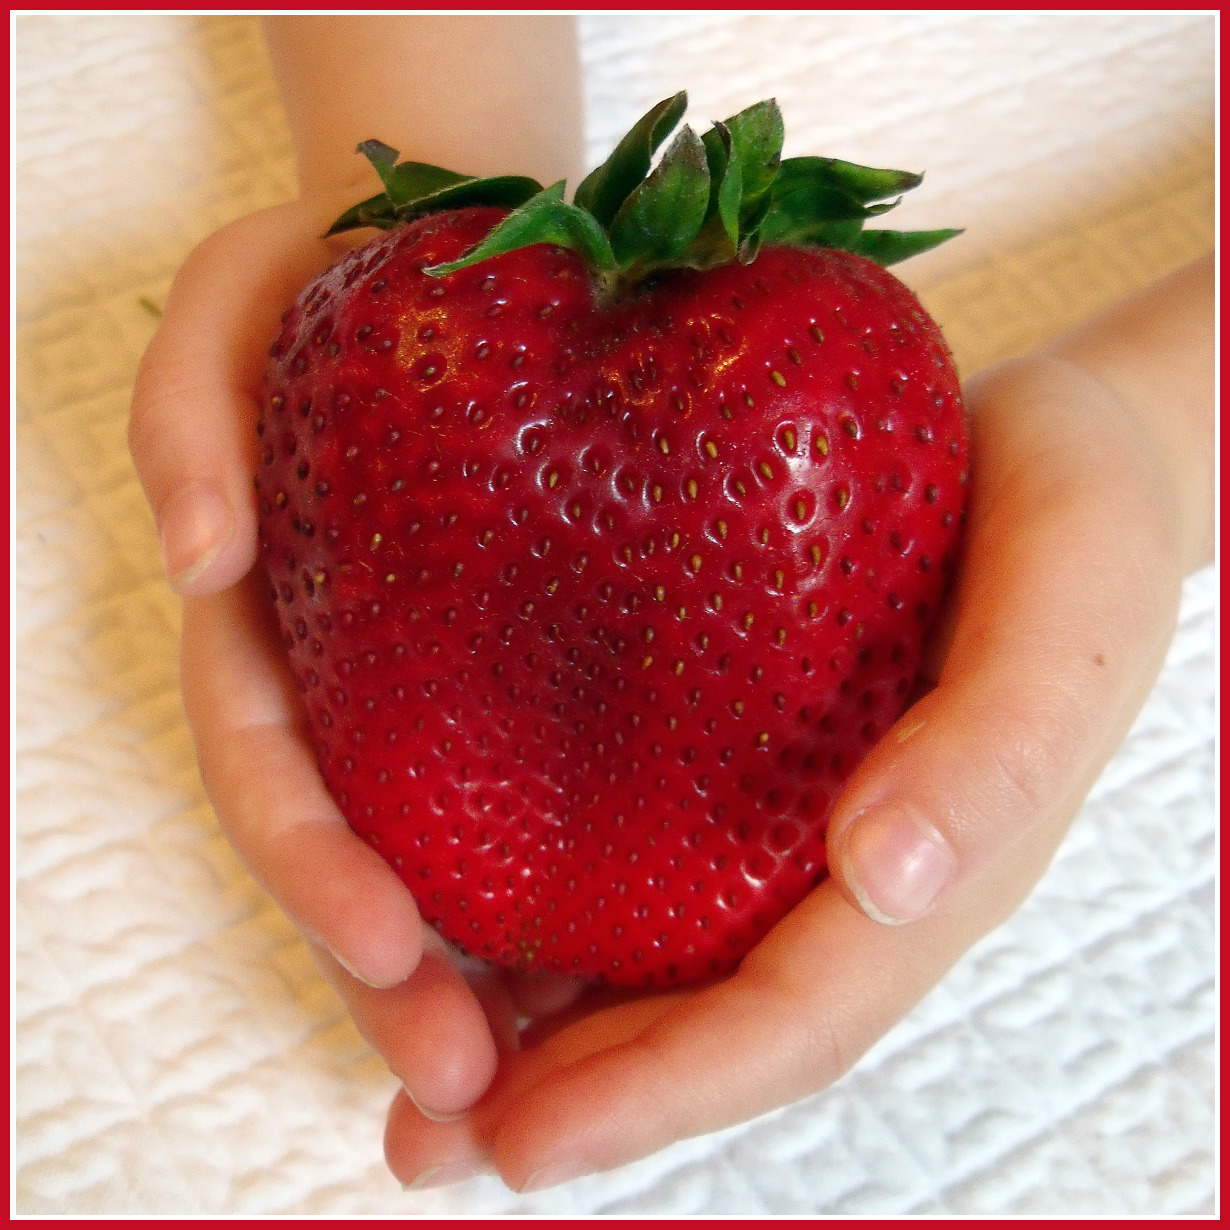 Giant Strawberries